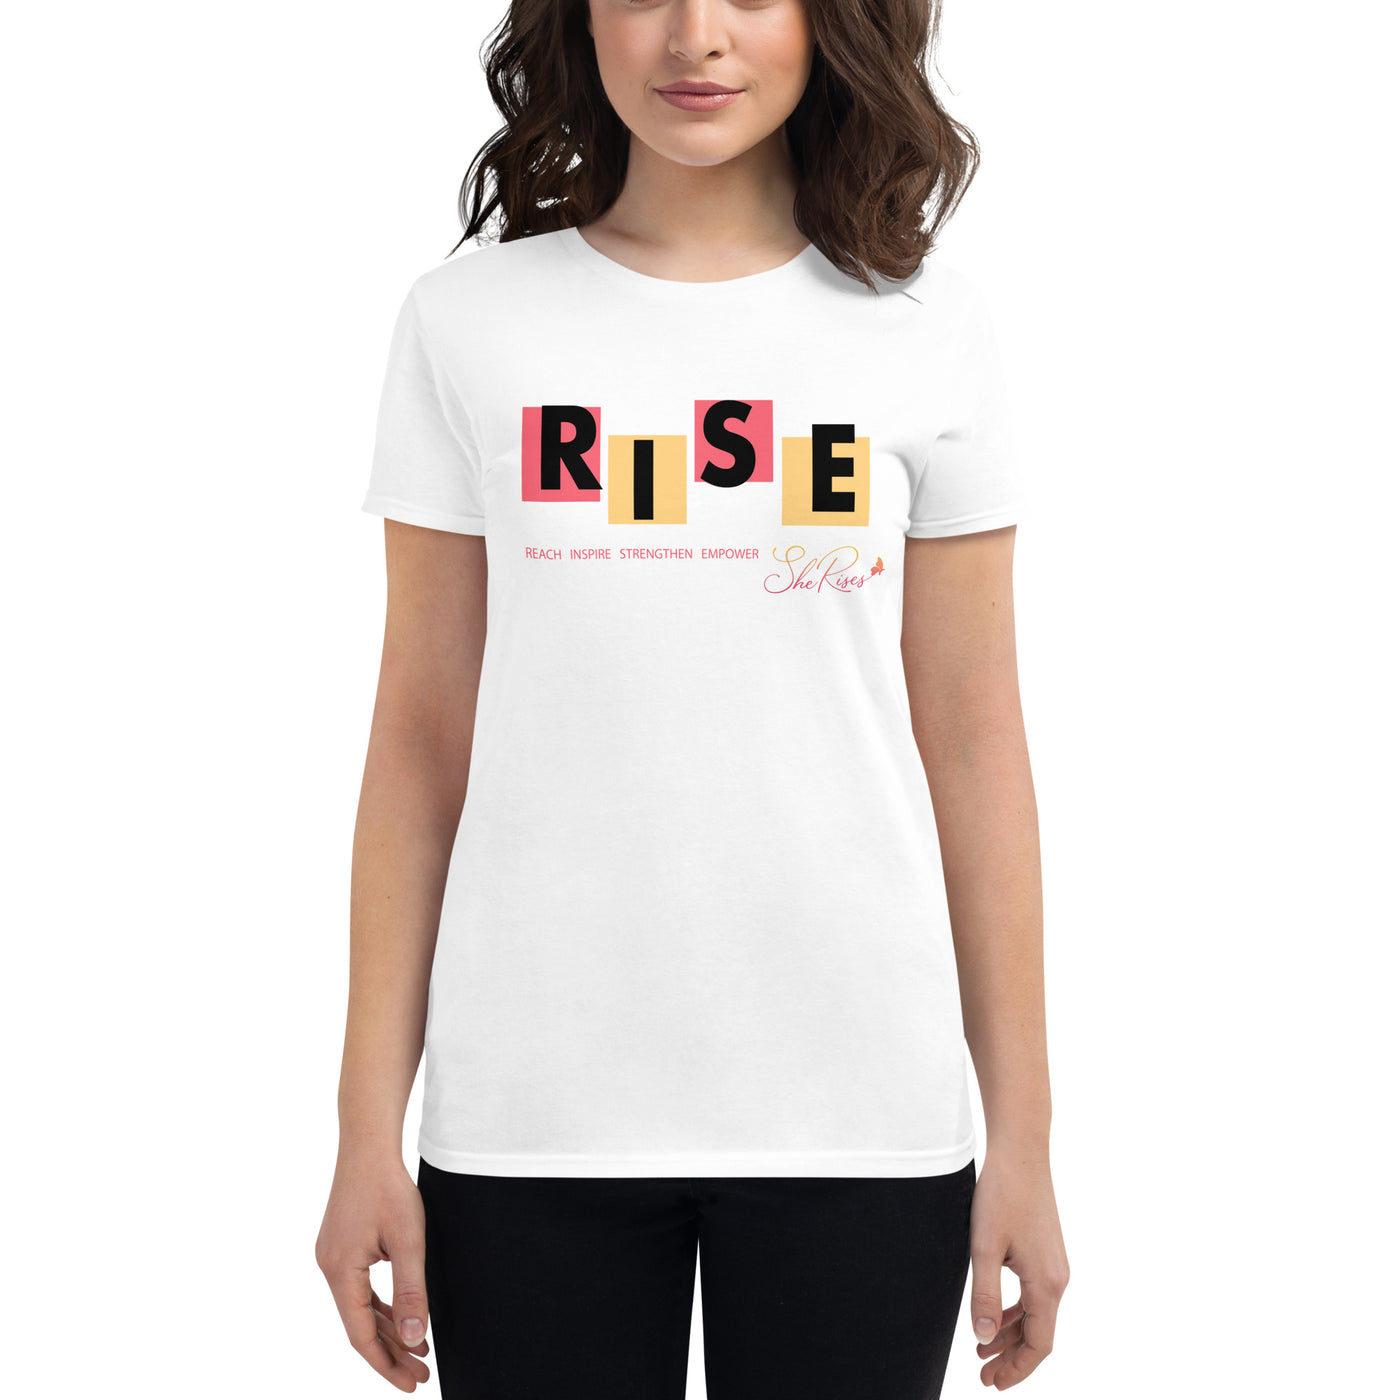 She Rises Women's short sleeve t-shirt